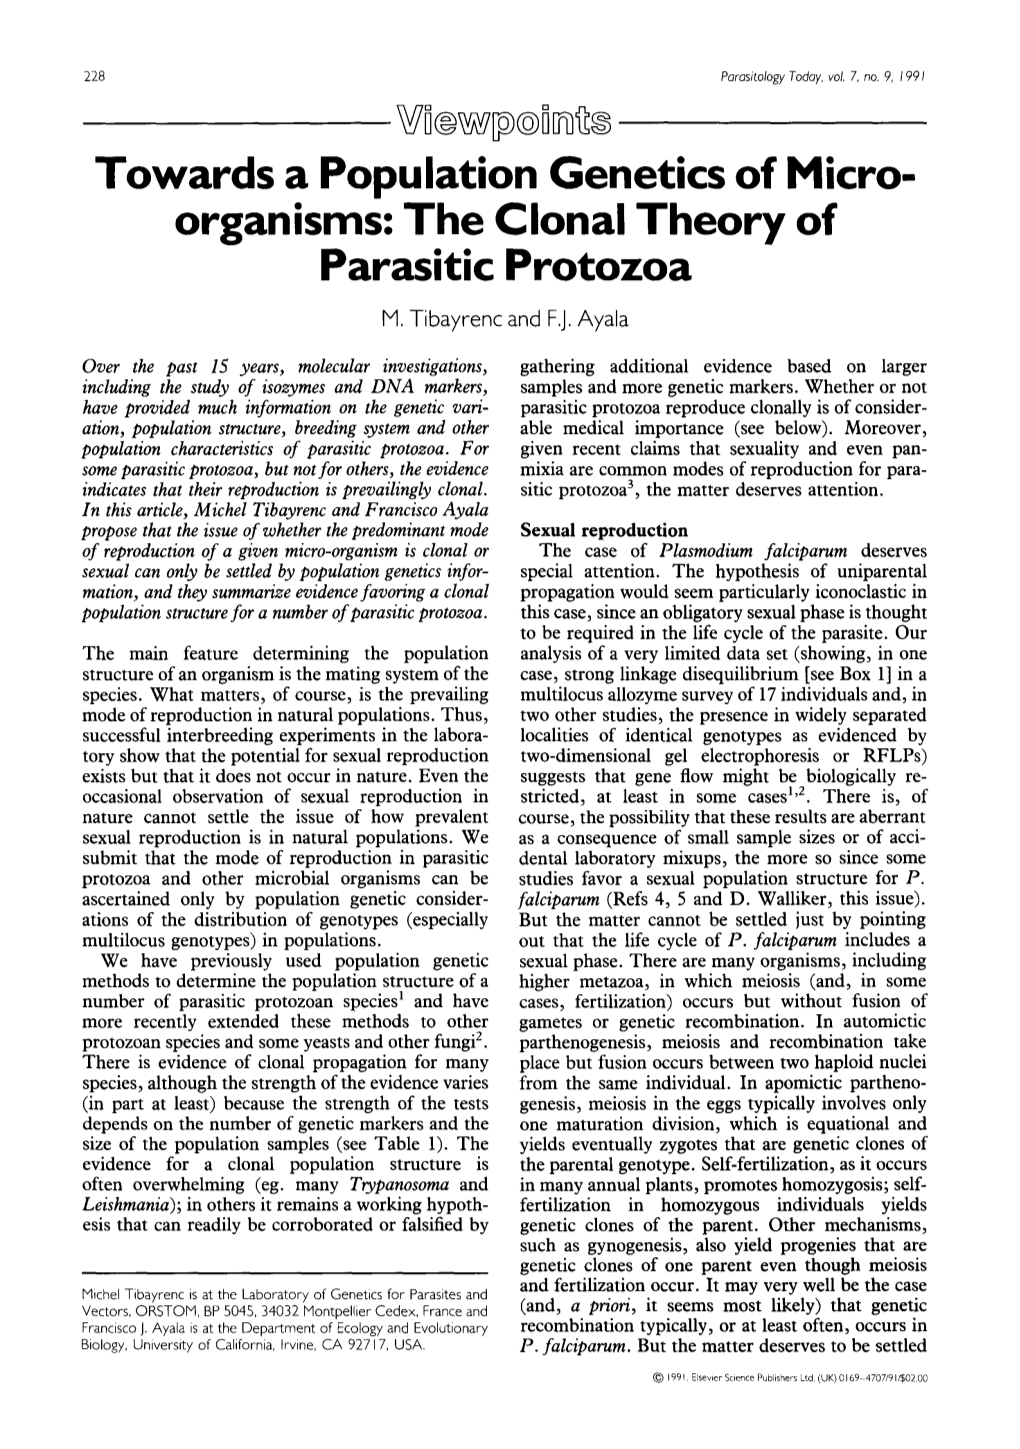 Organisms: the Clonal Theory of Parasitic Protozoa M